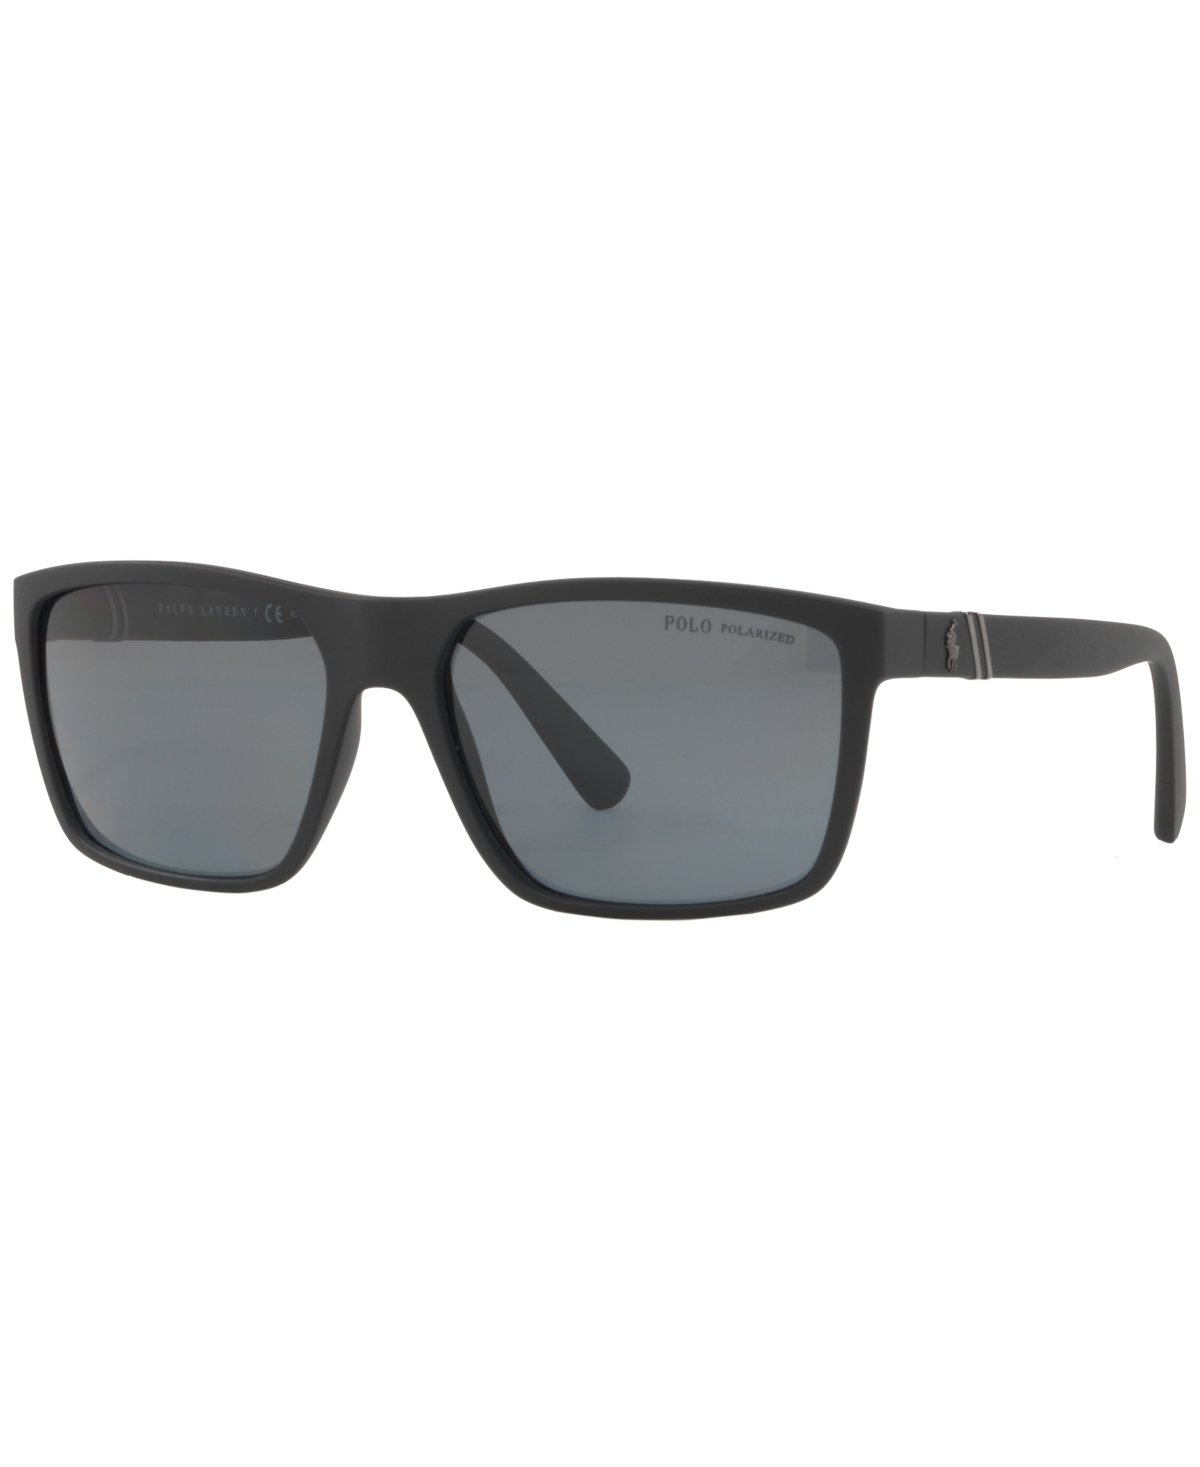 Polo Ralph Lauren Polarized Sunglasses, Ph4133 In Gray Polar,black Matte